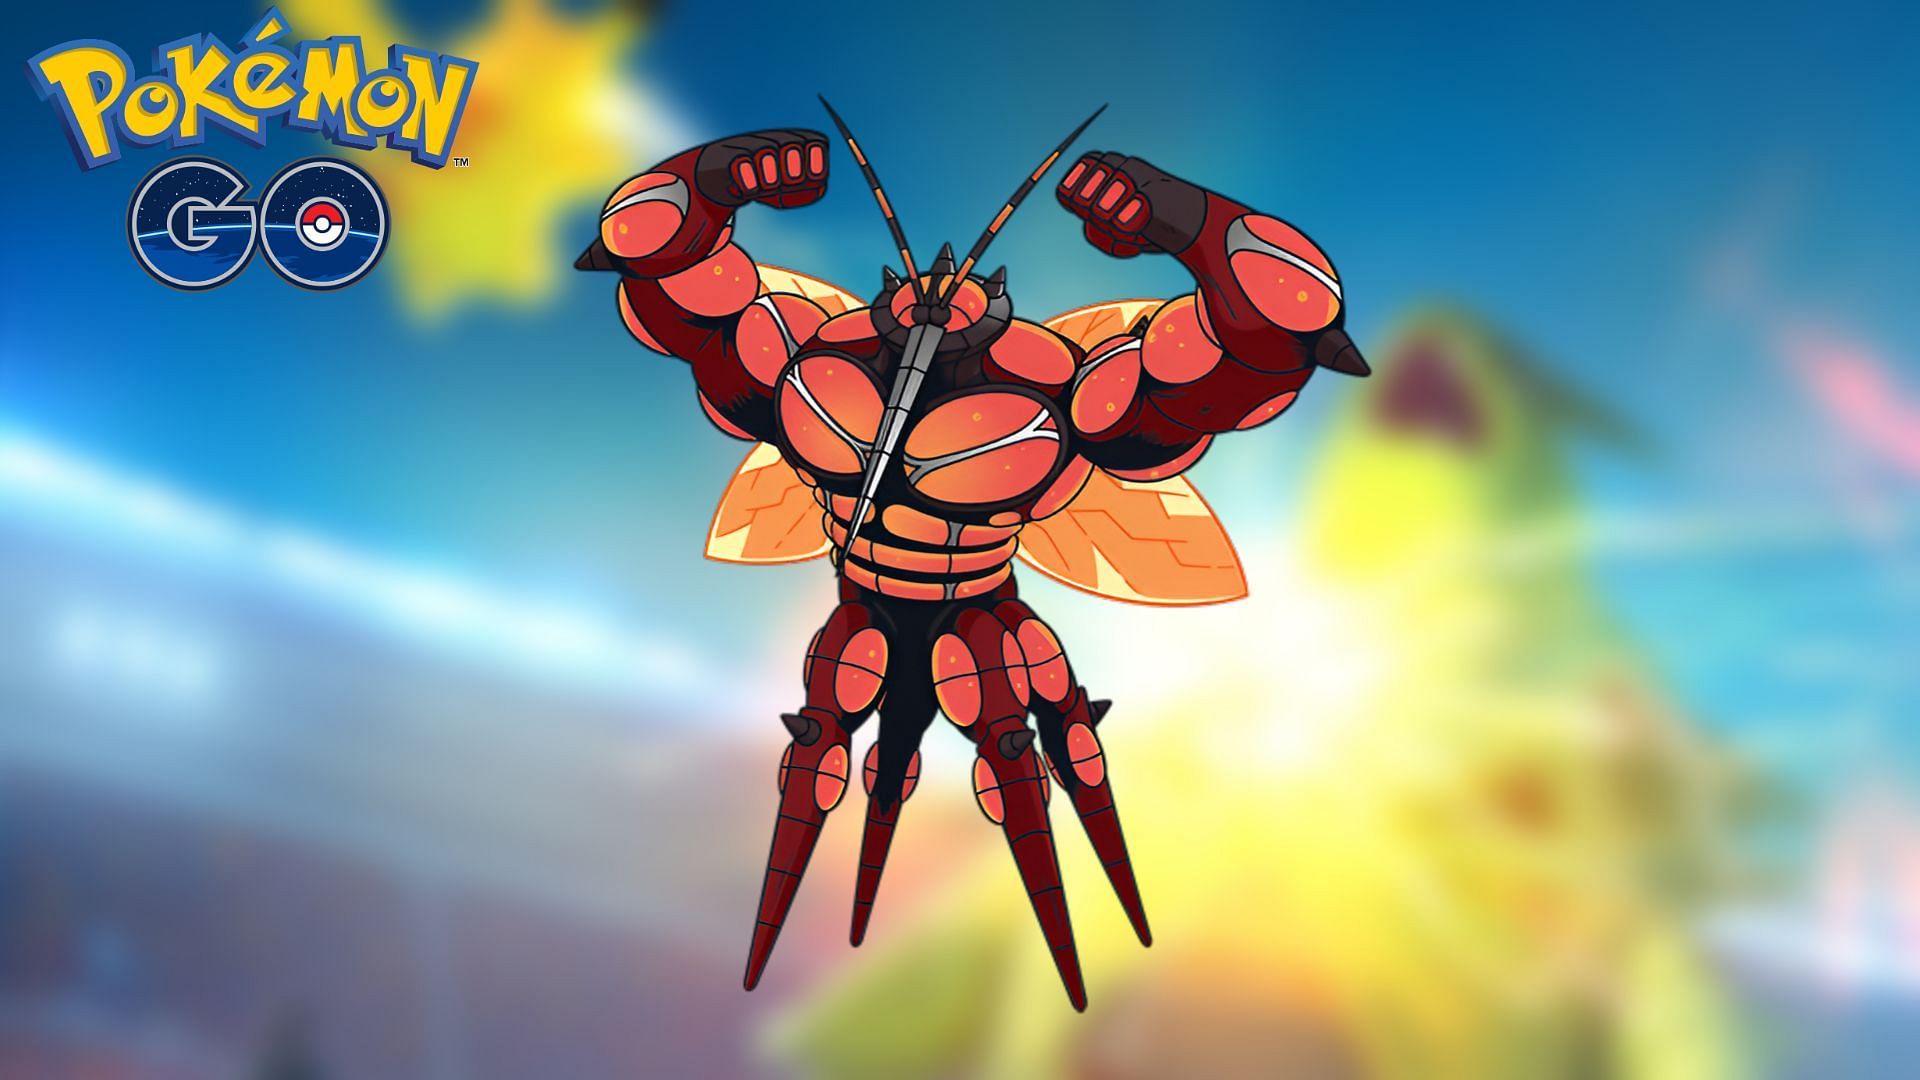 Buzzwole is a Bug/Fighting-type creature in Pokemon GO.